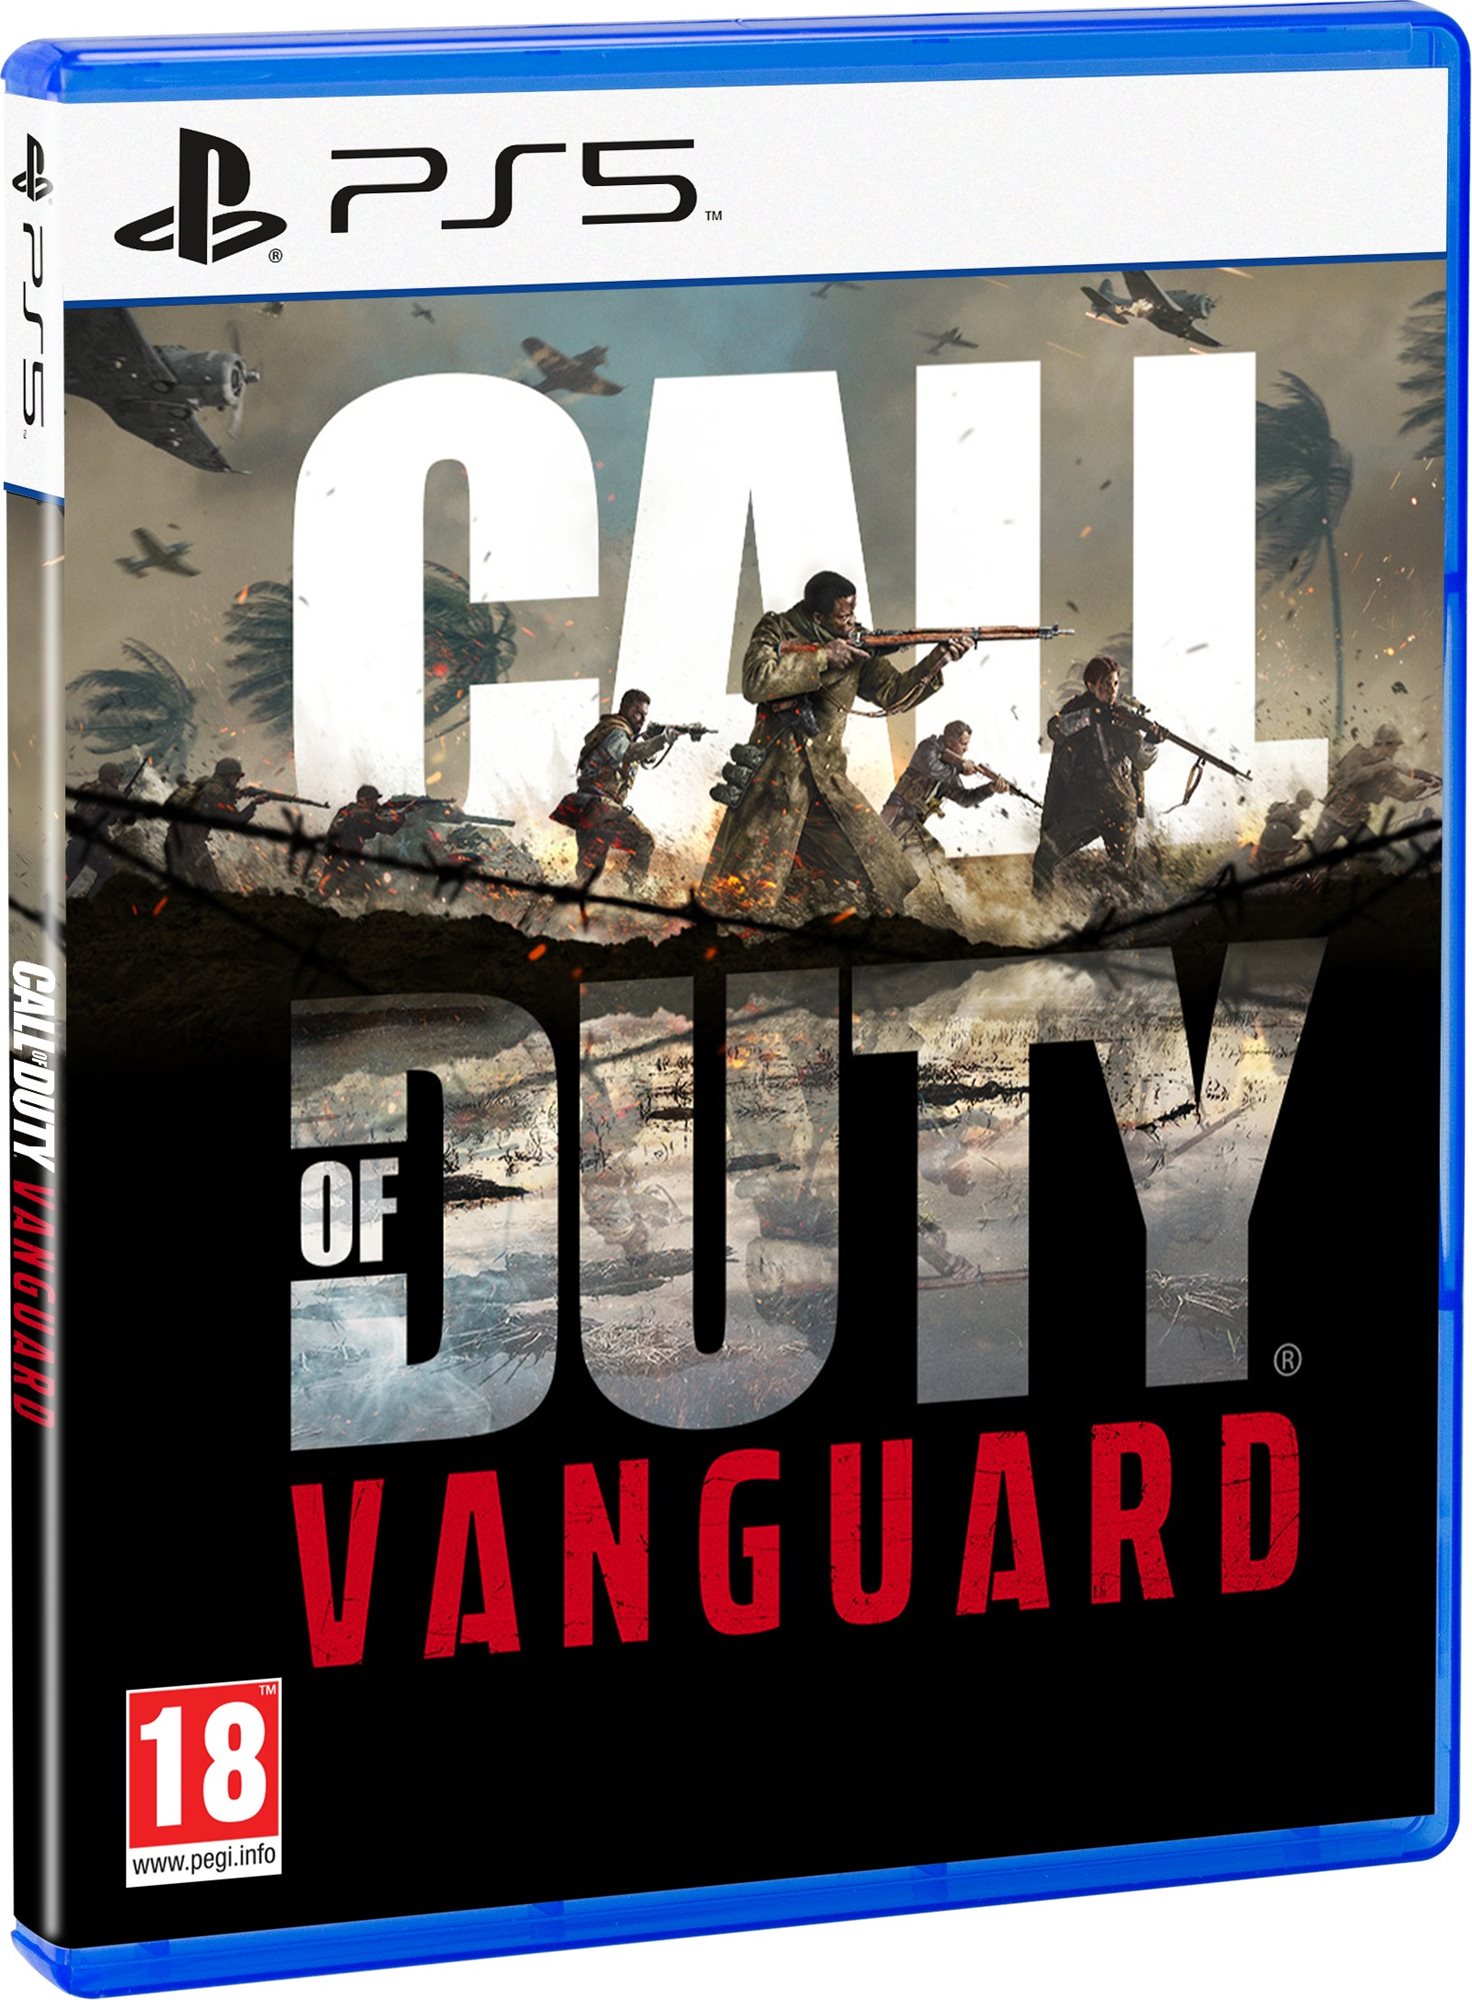 Konzol játék Call of Duty: Vanguard - PS5